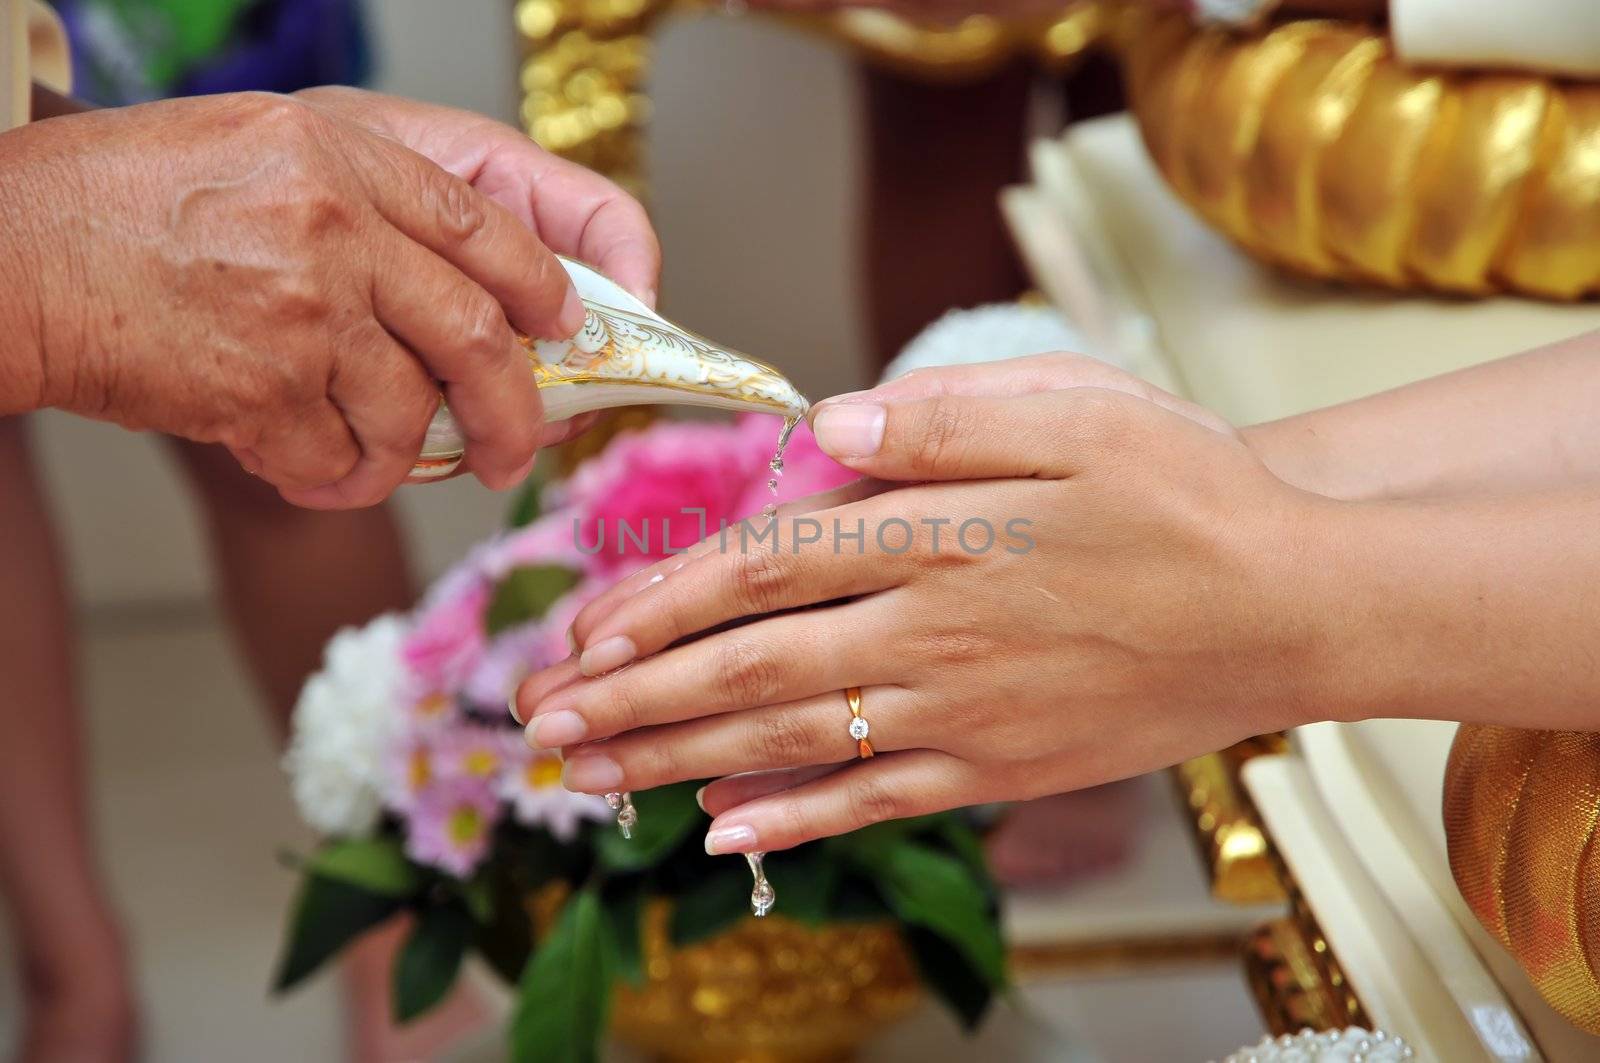 Thai wedding style ceremony by phanlop88